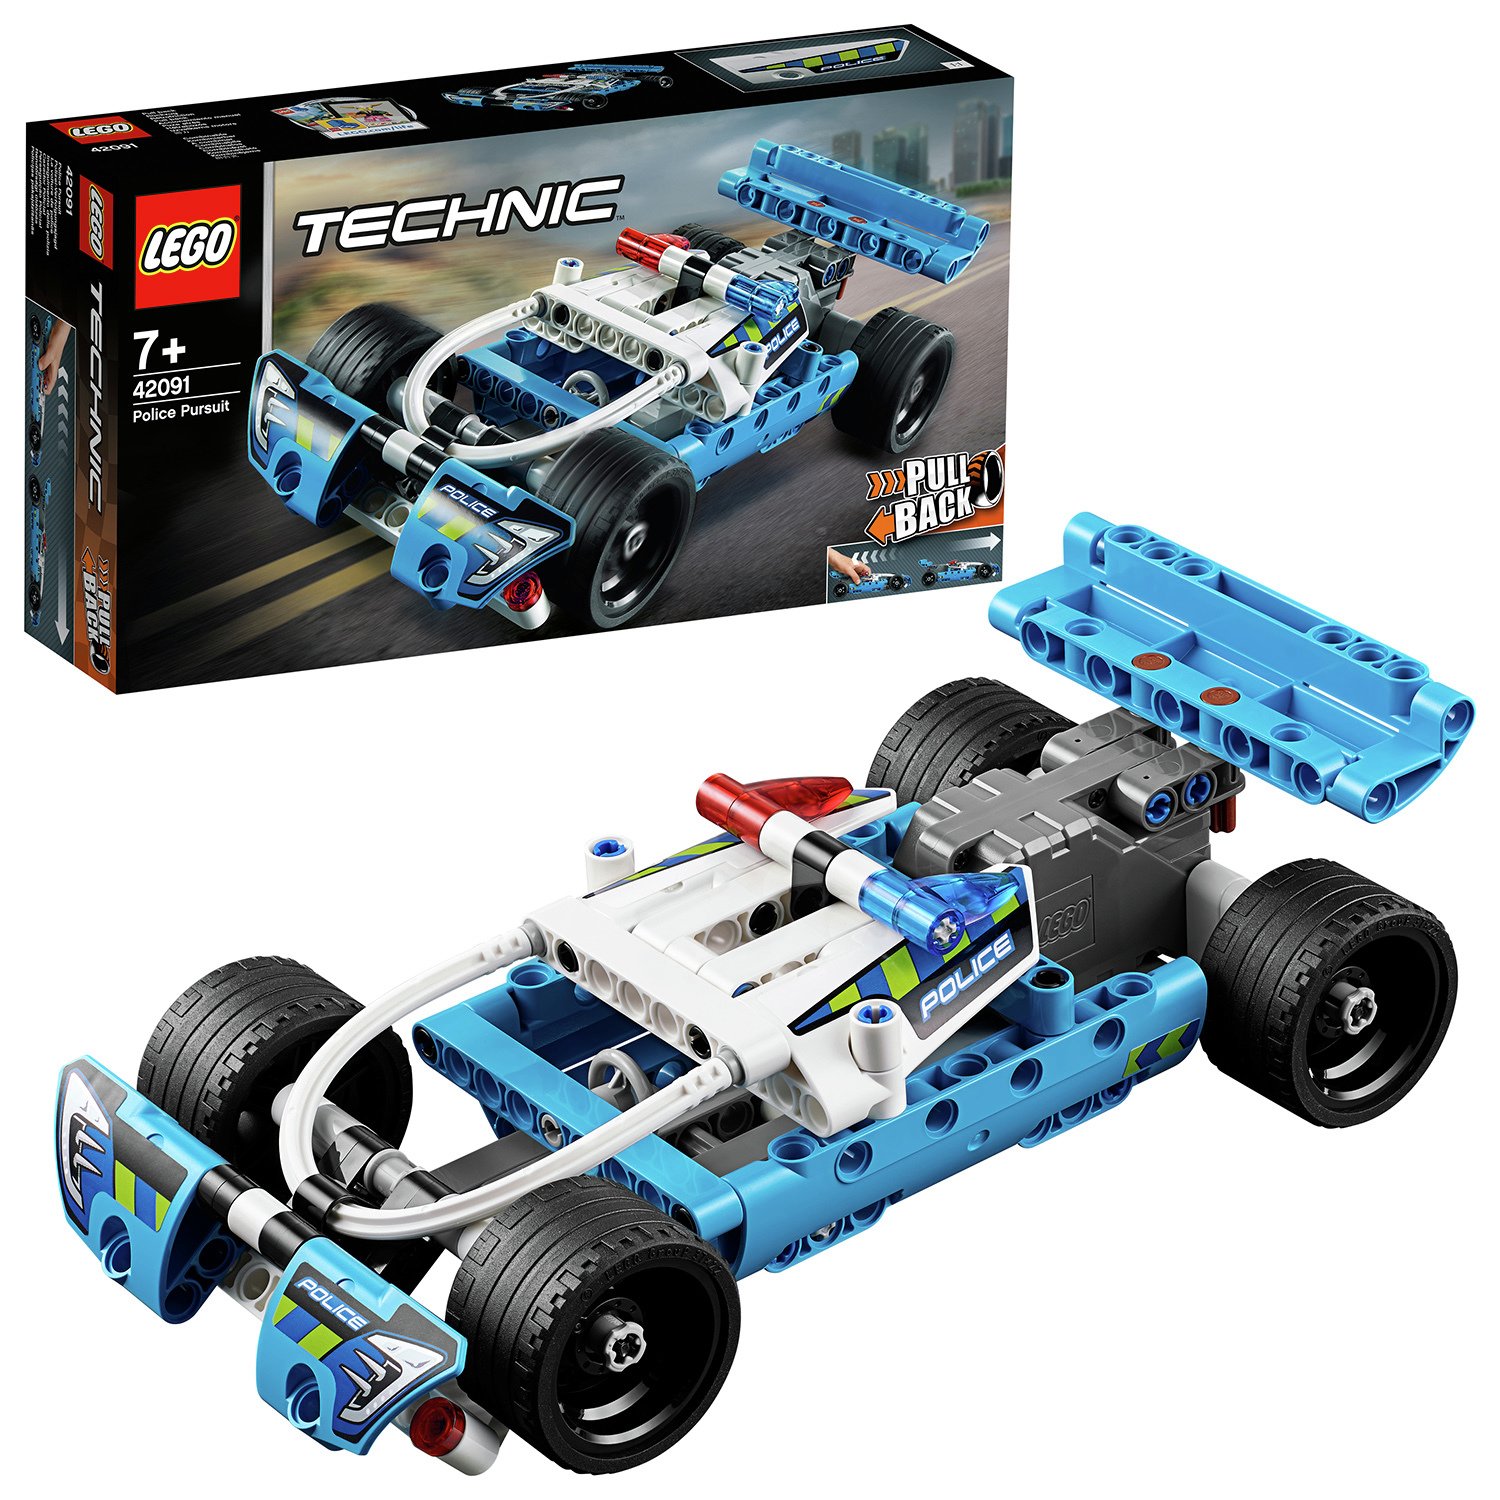 LEGO Technic Police Pursuit 4x4 Toy Car Model - 42091